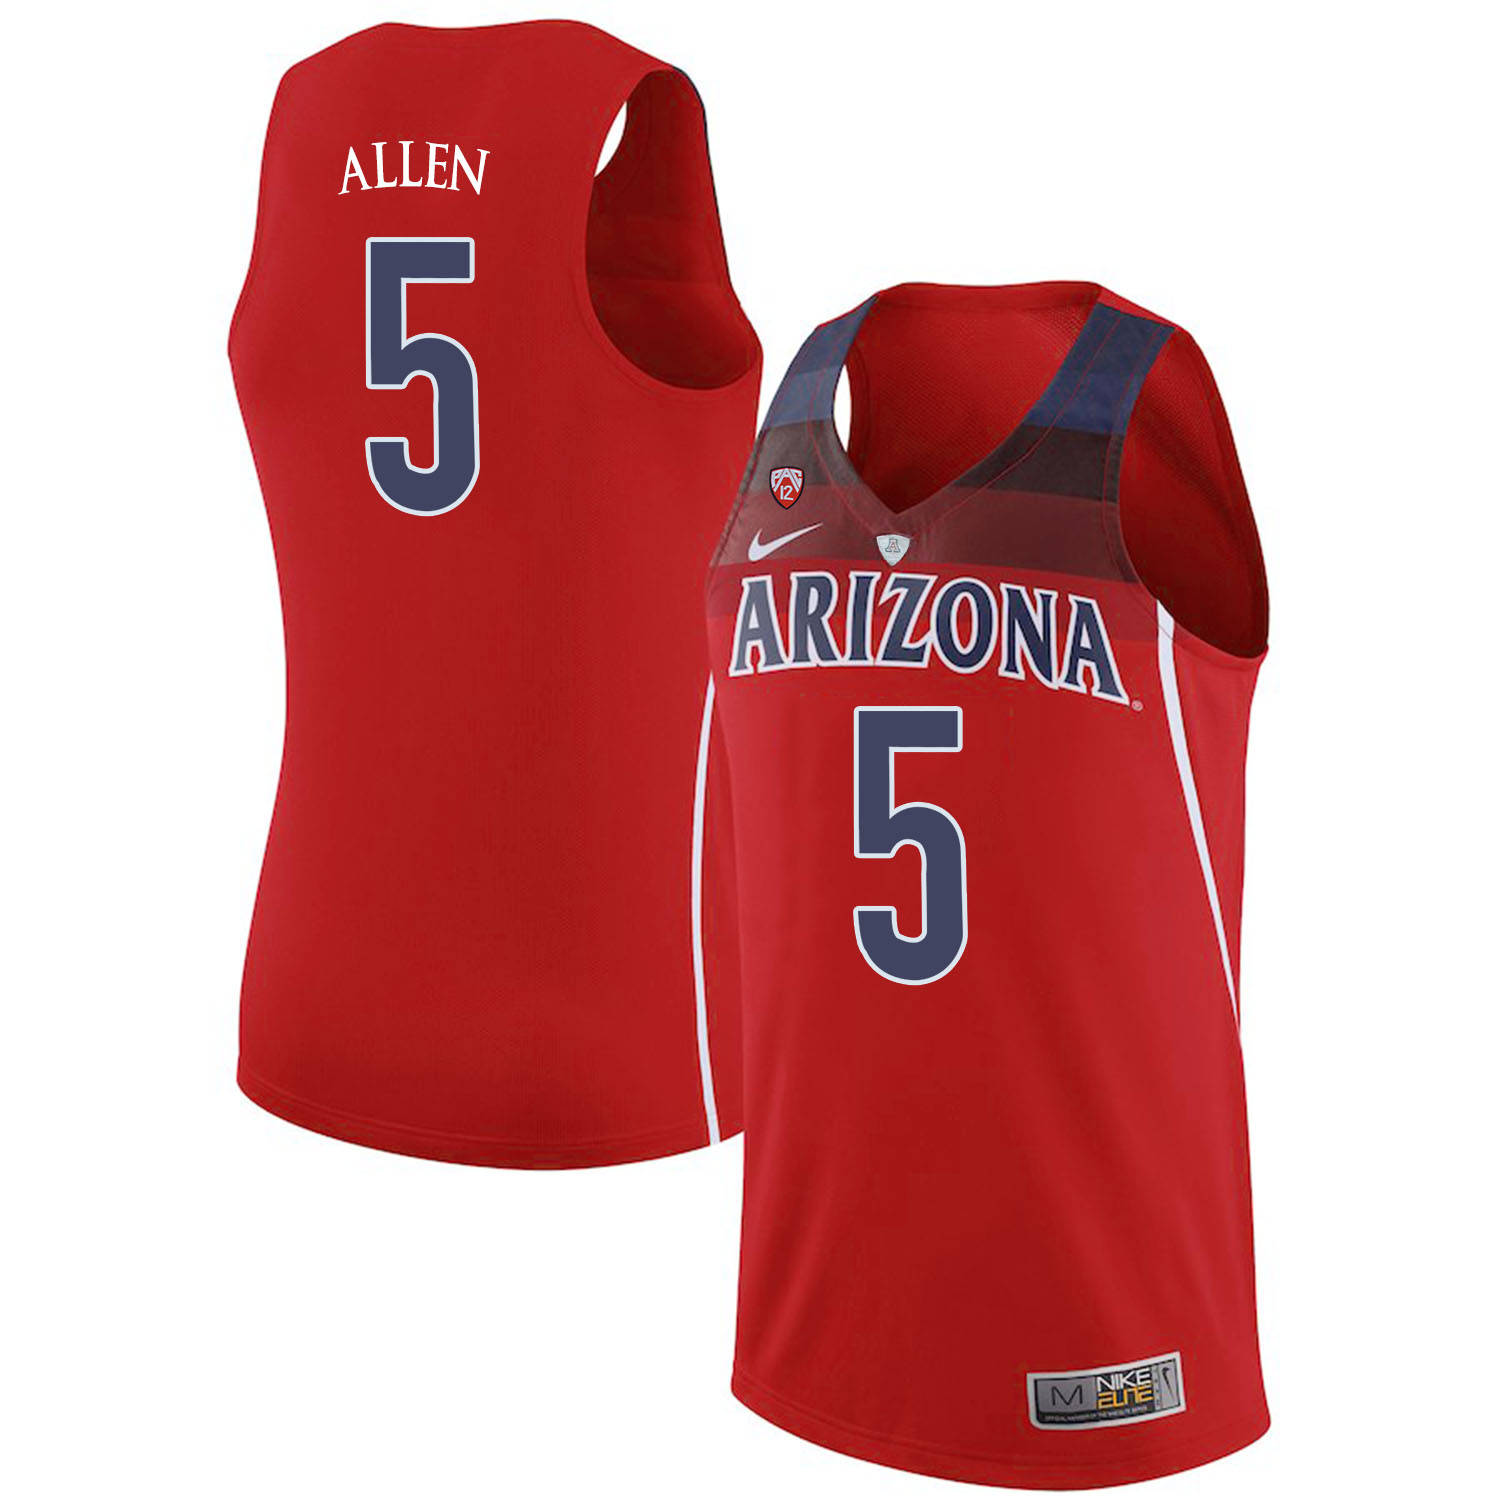 Arizona Wildcats 5 Kadeem Allen Red College Basketball Jersey